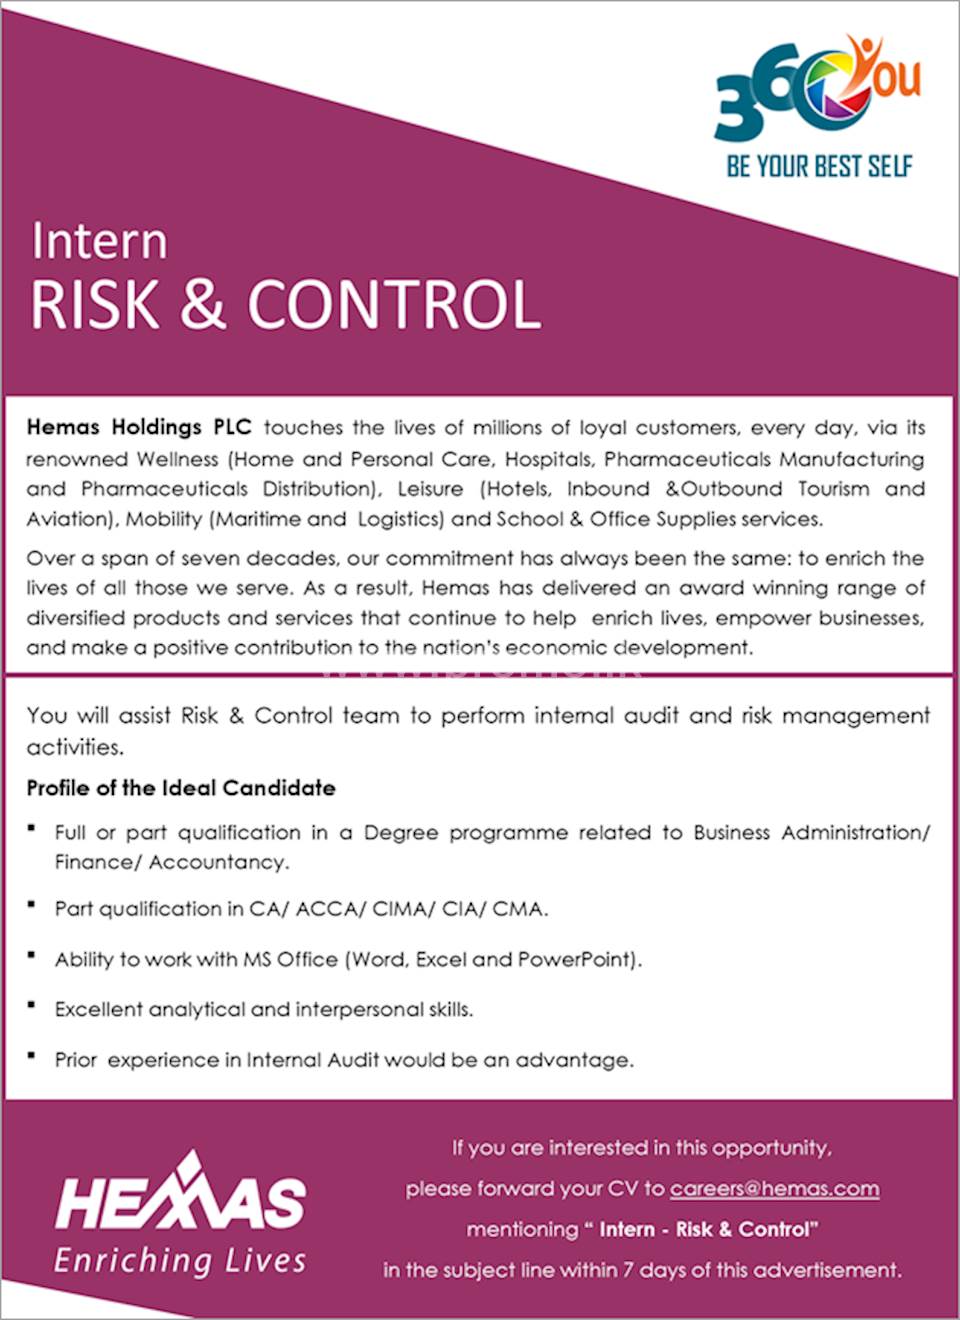 Intern - Risk and Control